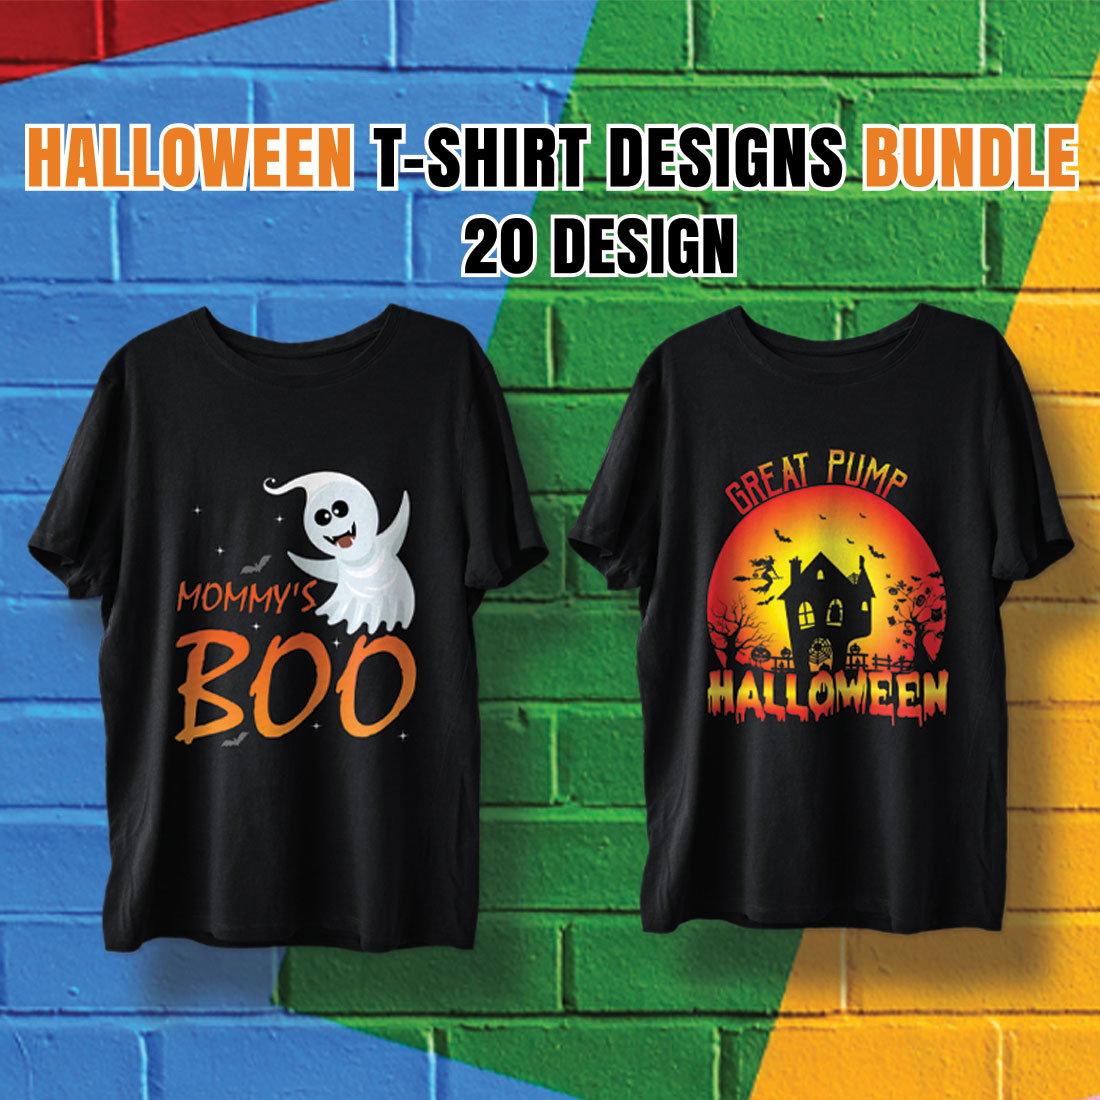 Halloween T-shirt Bundle 20 Design preview image.